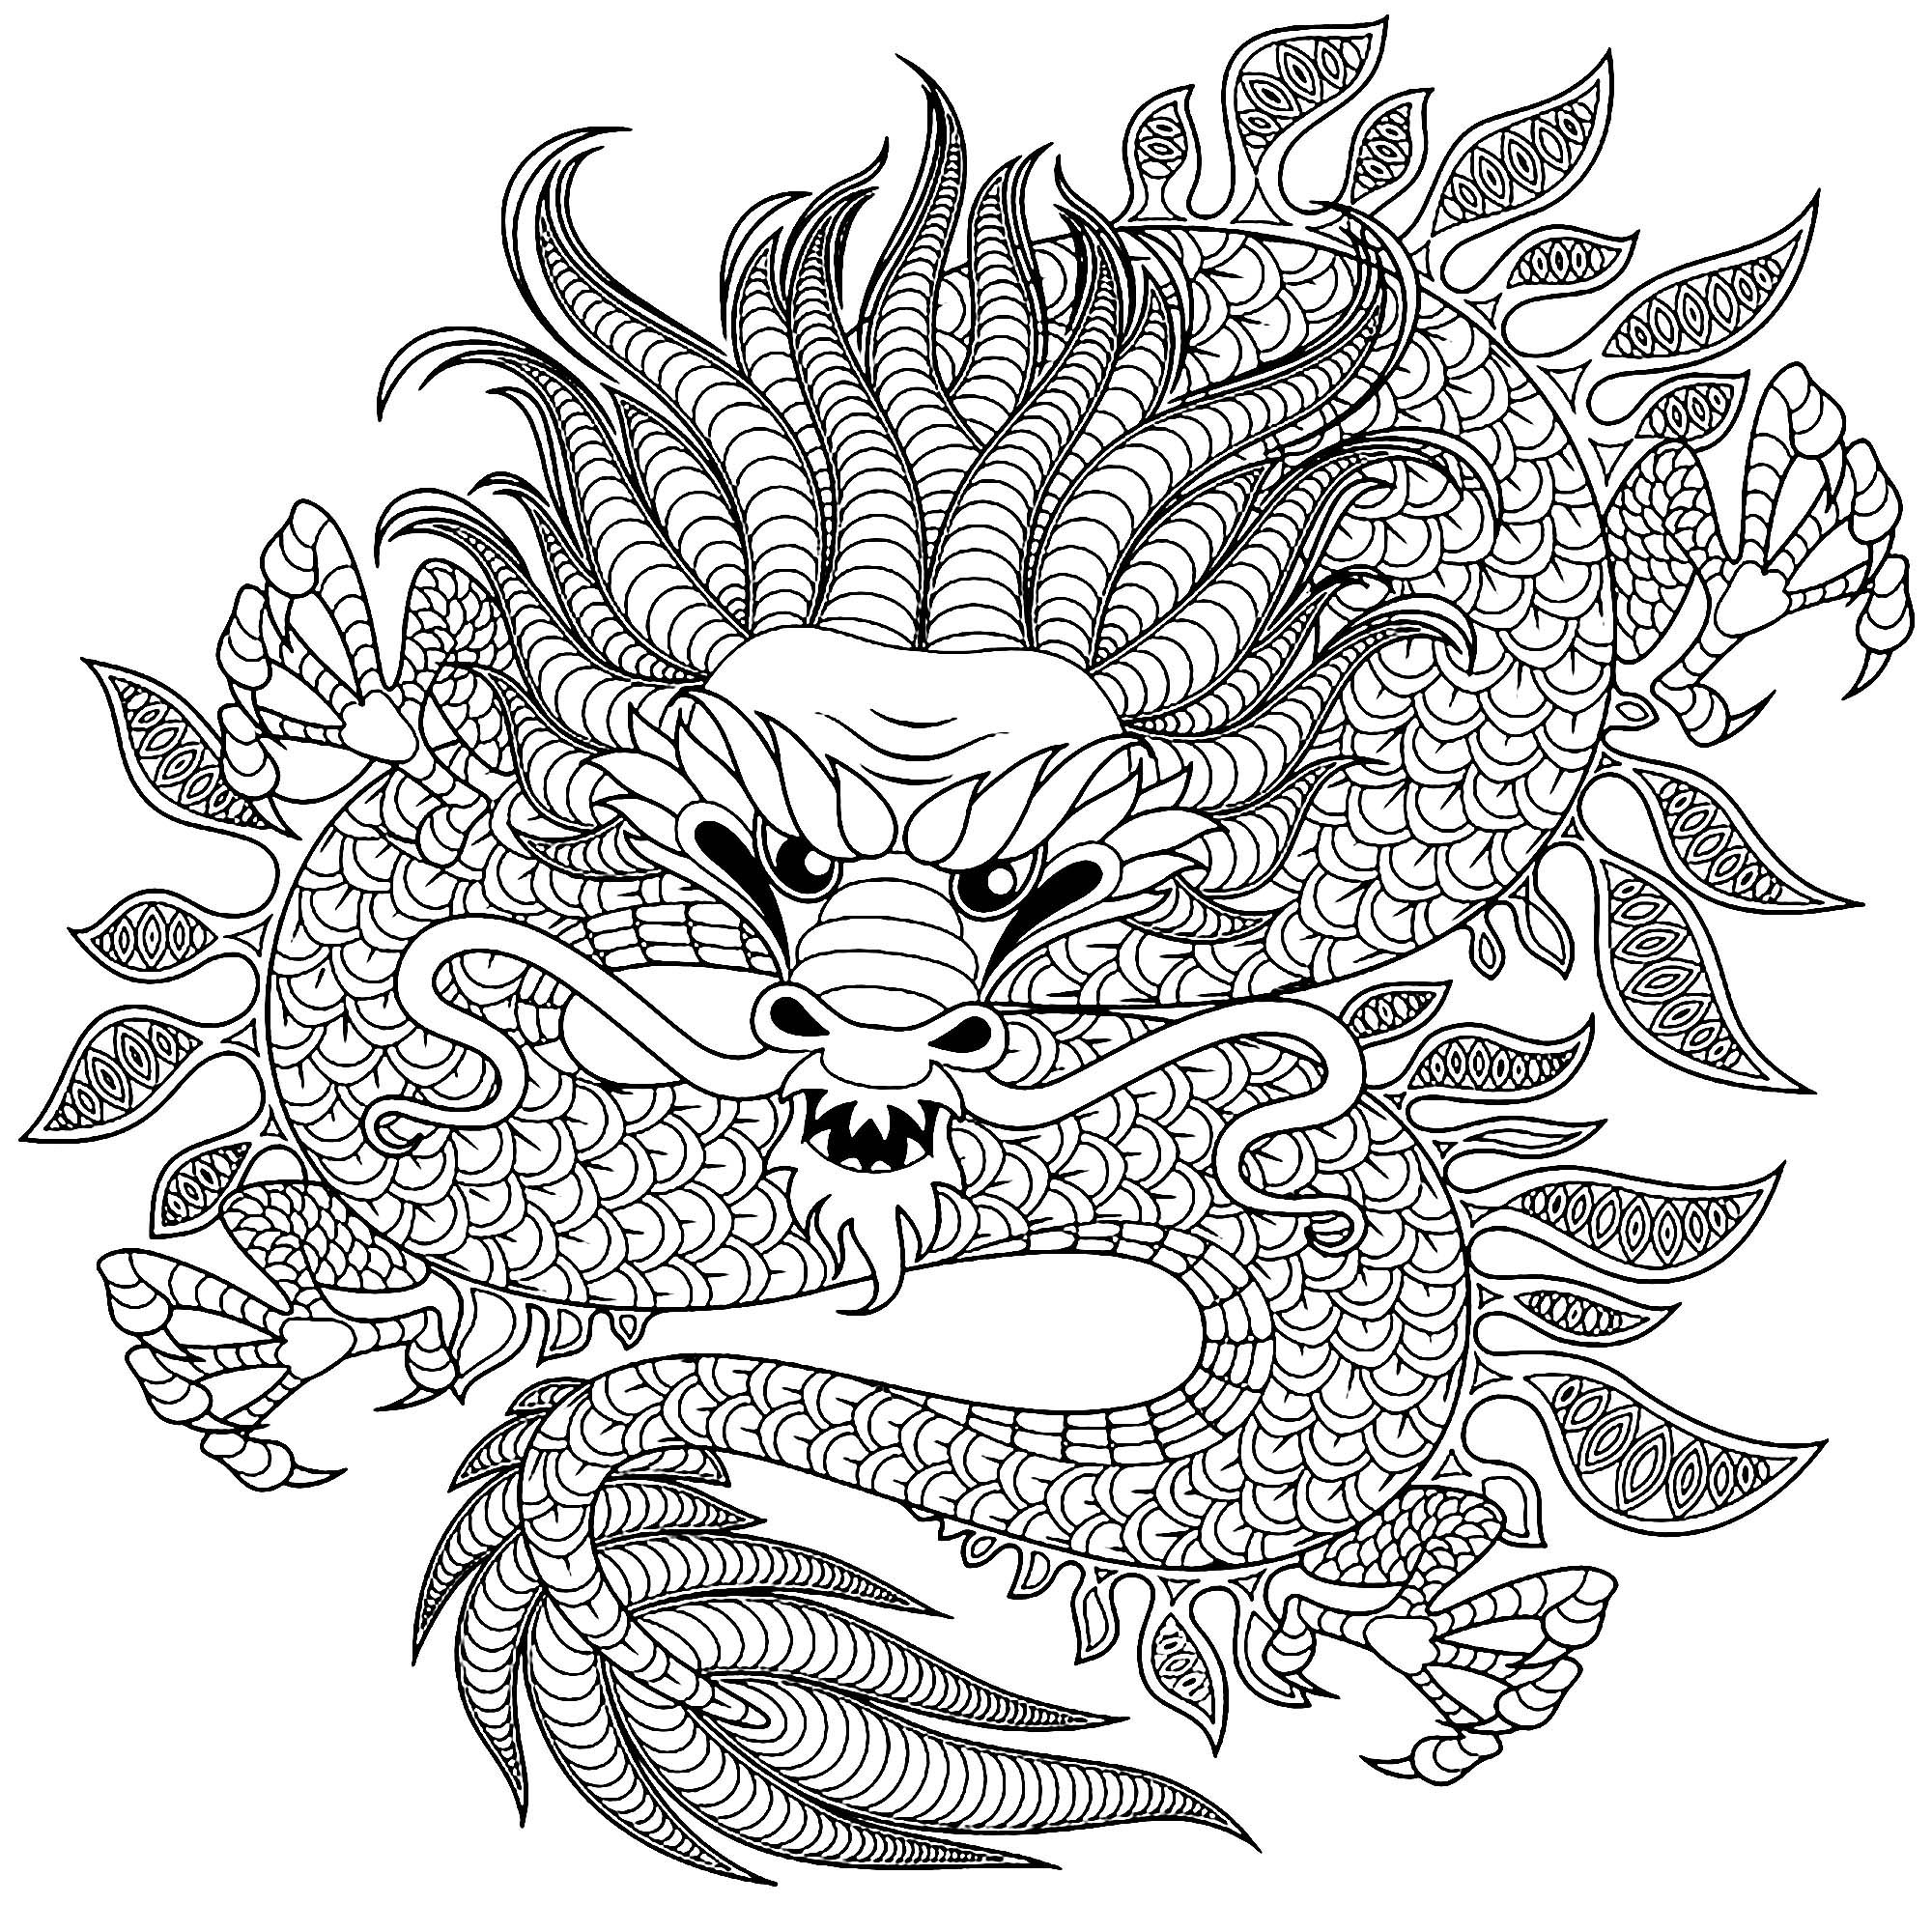 Incredible Dragon, in a circular drawing, Source : 123rf   Artist : alka5051